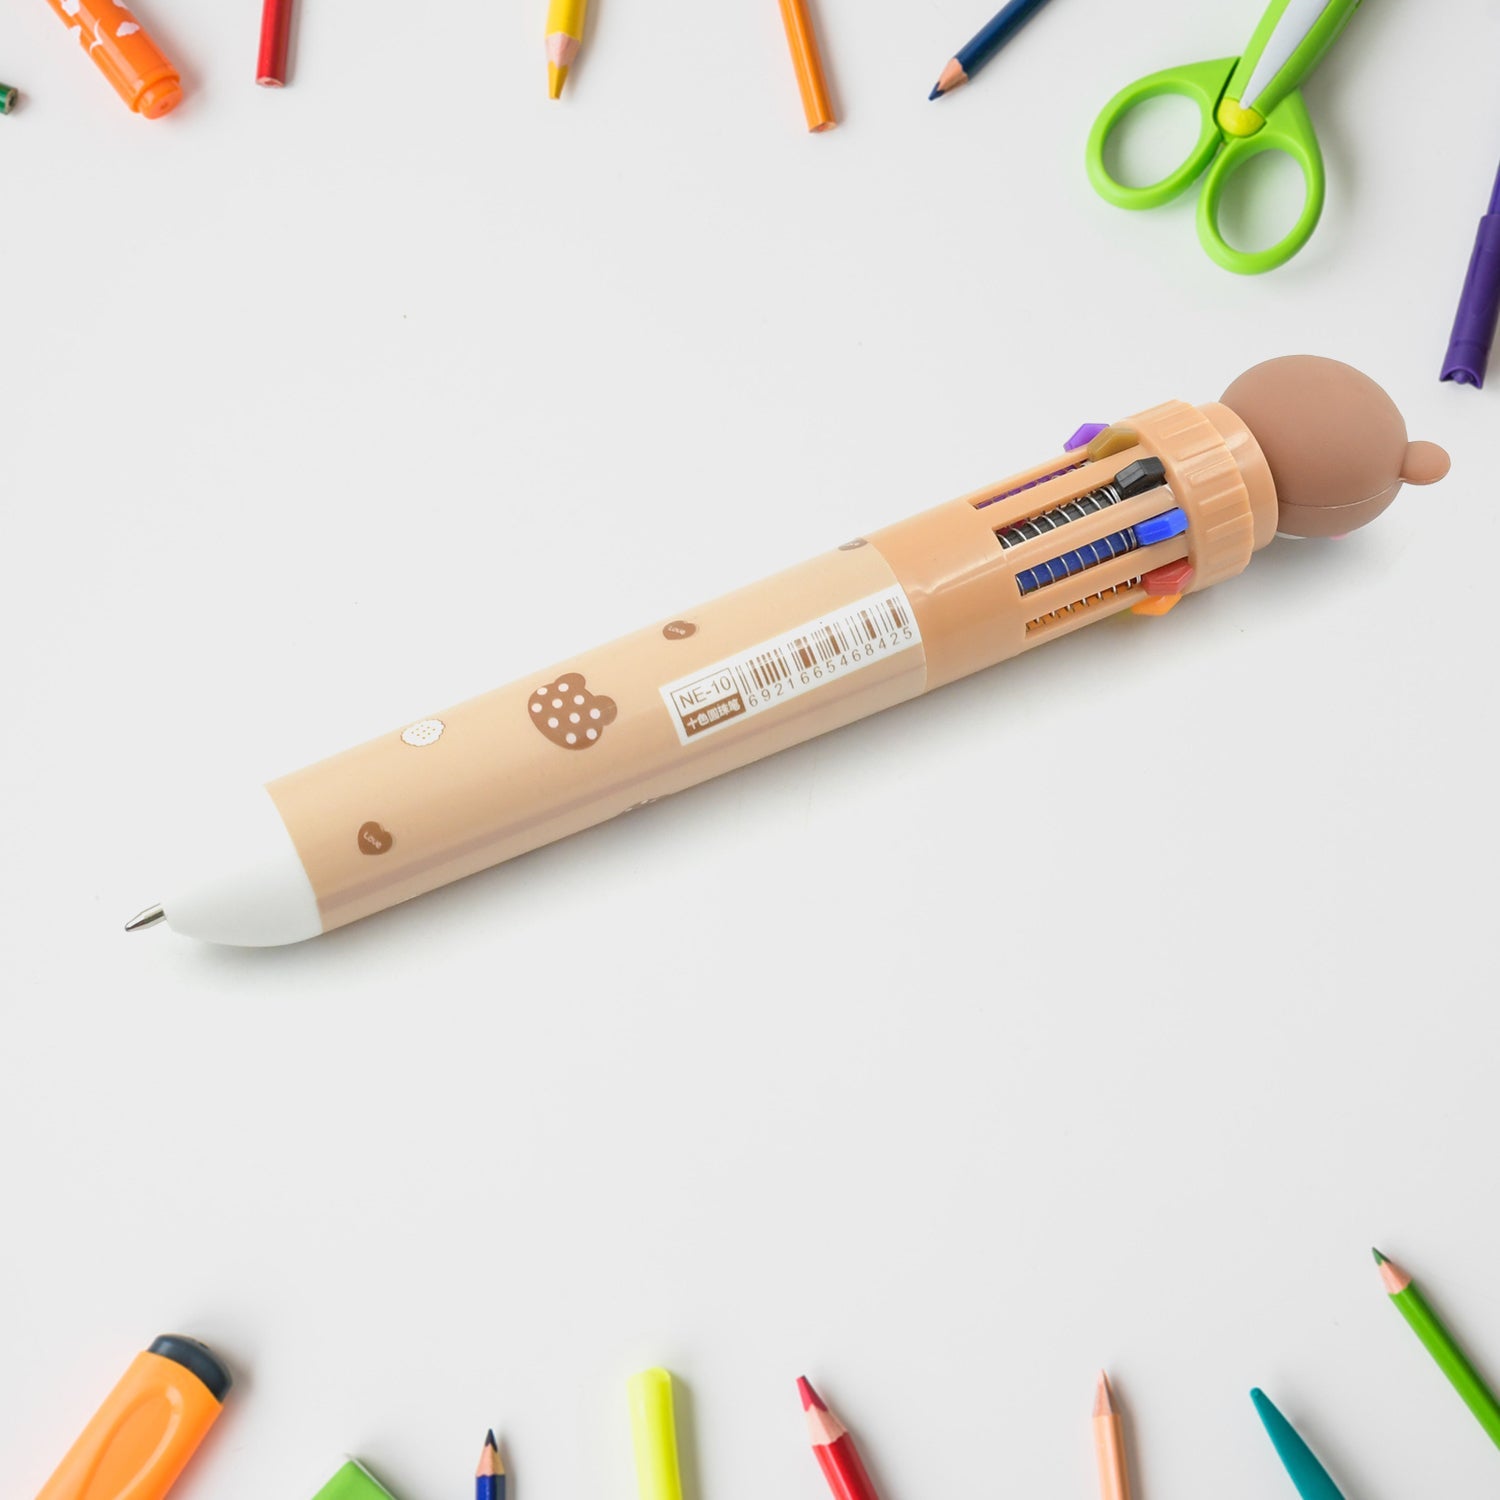 Cartoon Bear Ballpoint Pen School Office Supply Stationery Multicolored Pens  ~